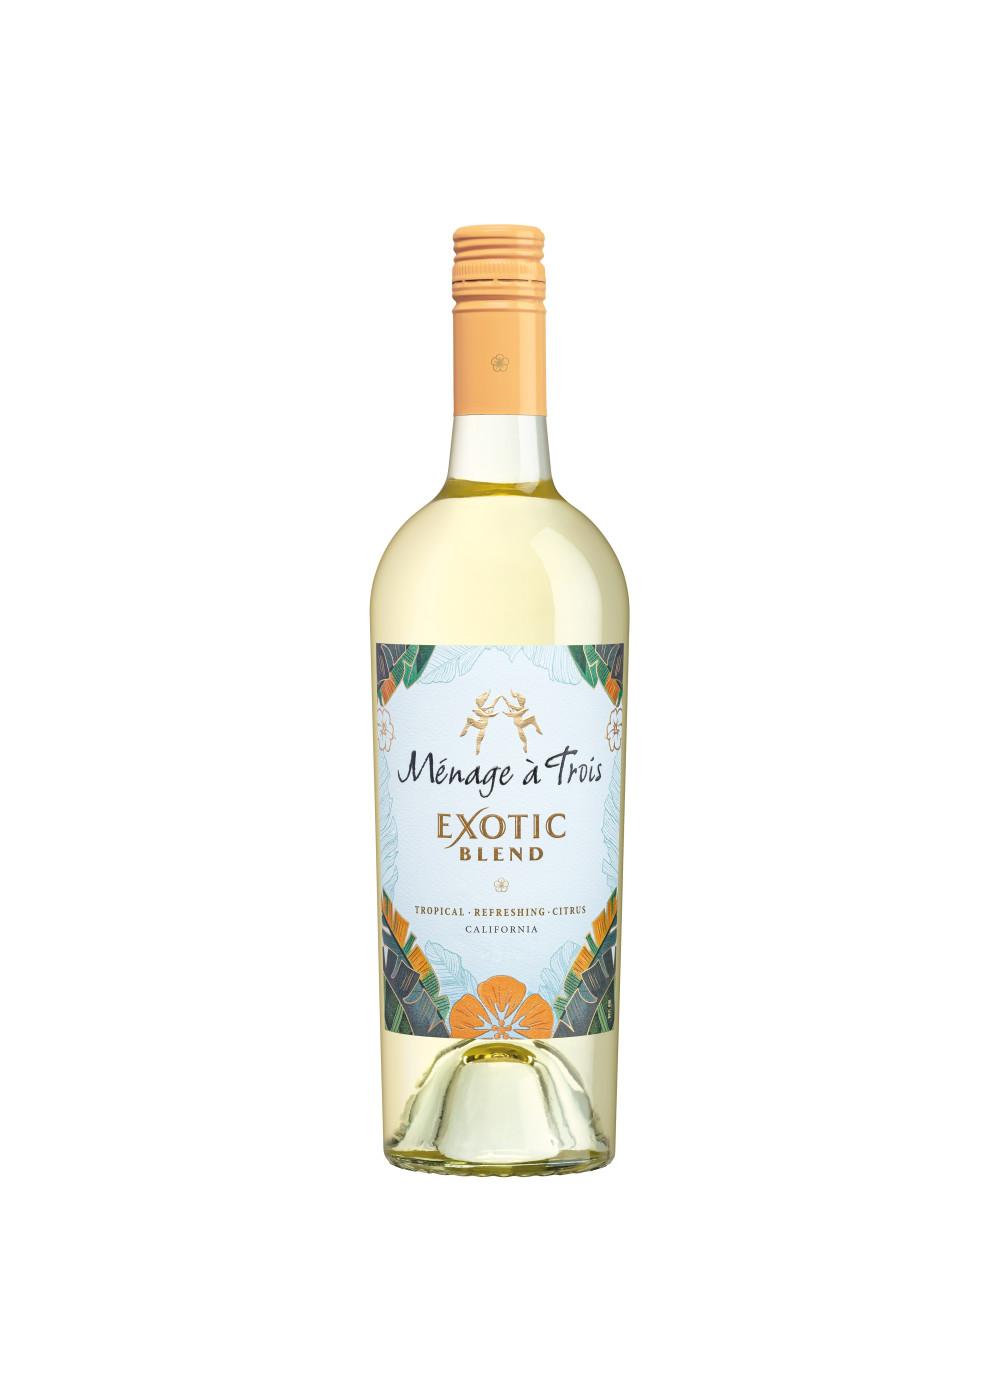 Ménage à Trois Exotic White Wine Blend; image 1 of 4